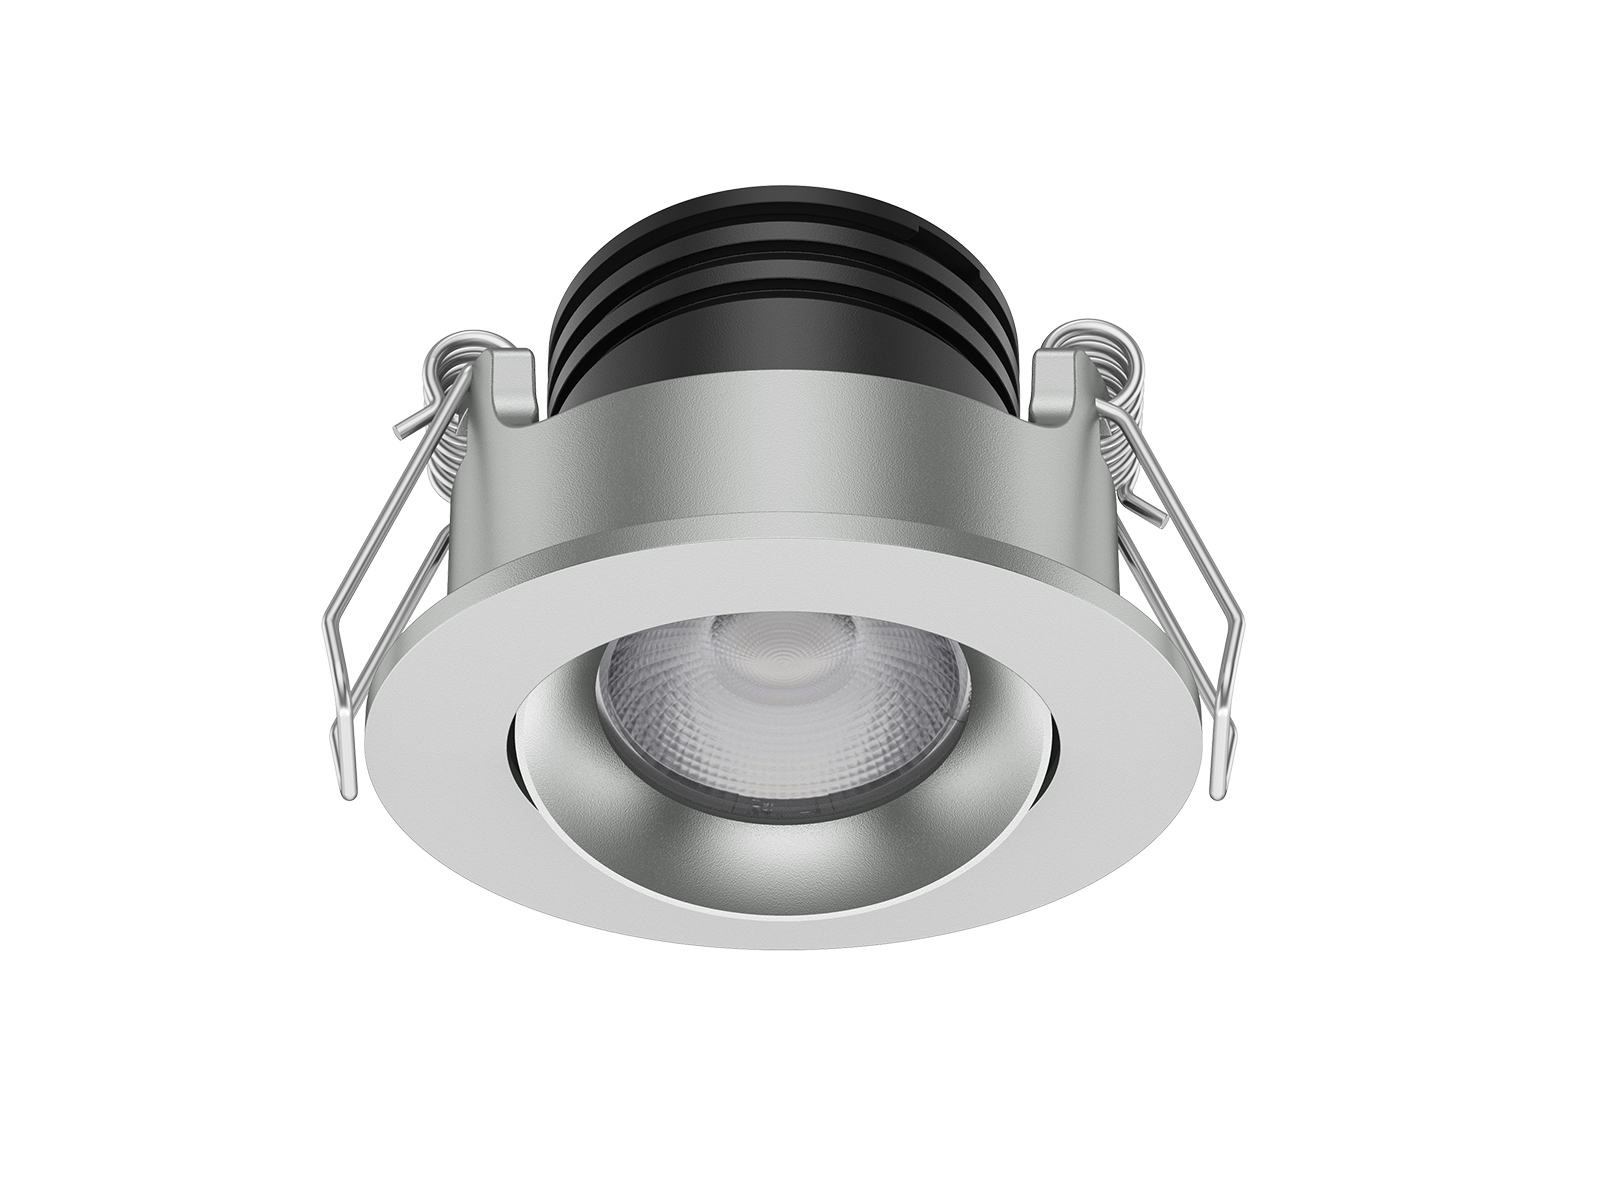 DL268 Deep Reflector Anti-Glare Led Downlight - UPSHINE Lighting